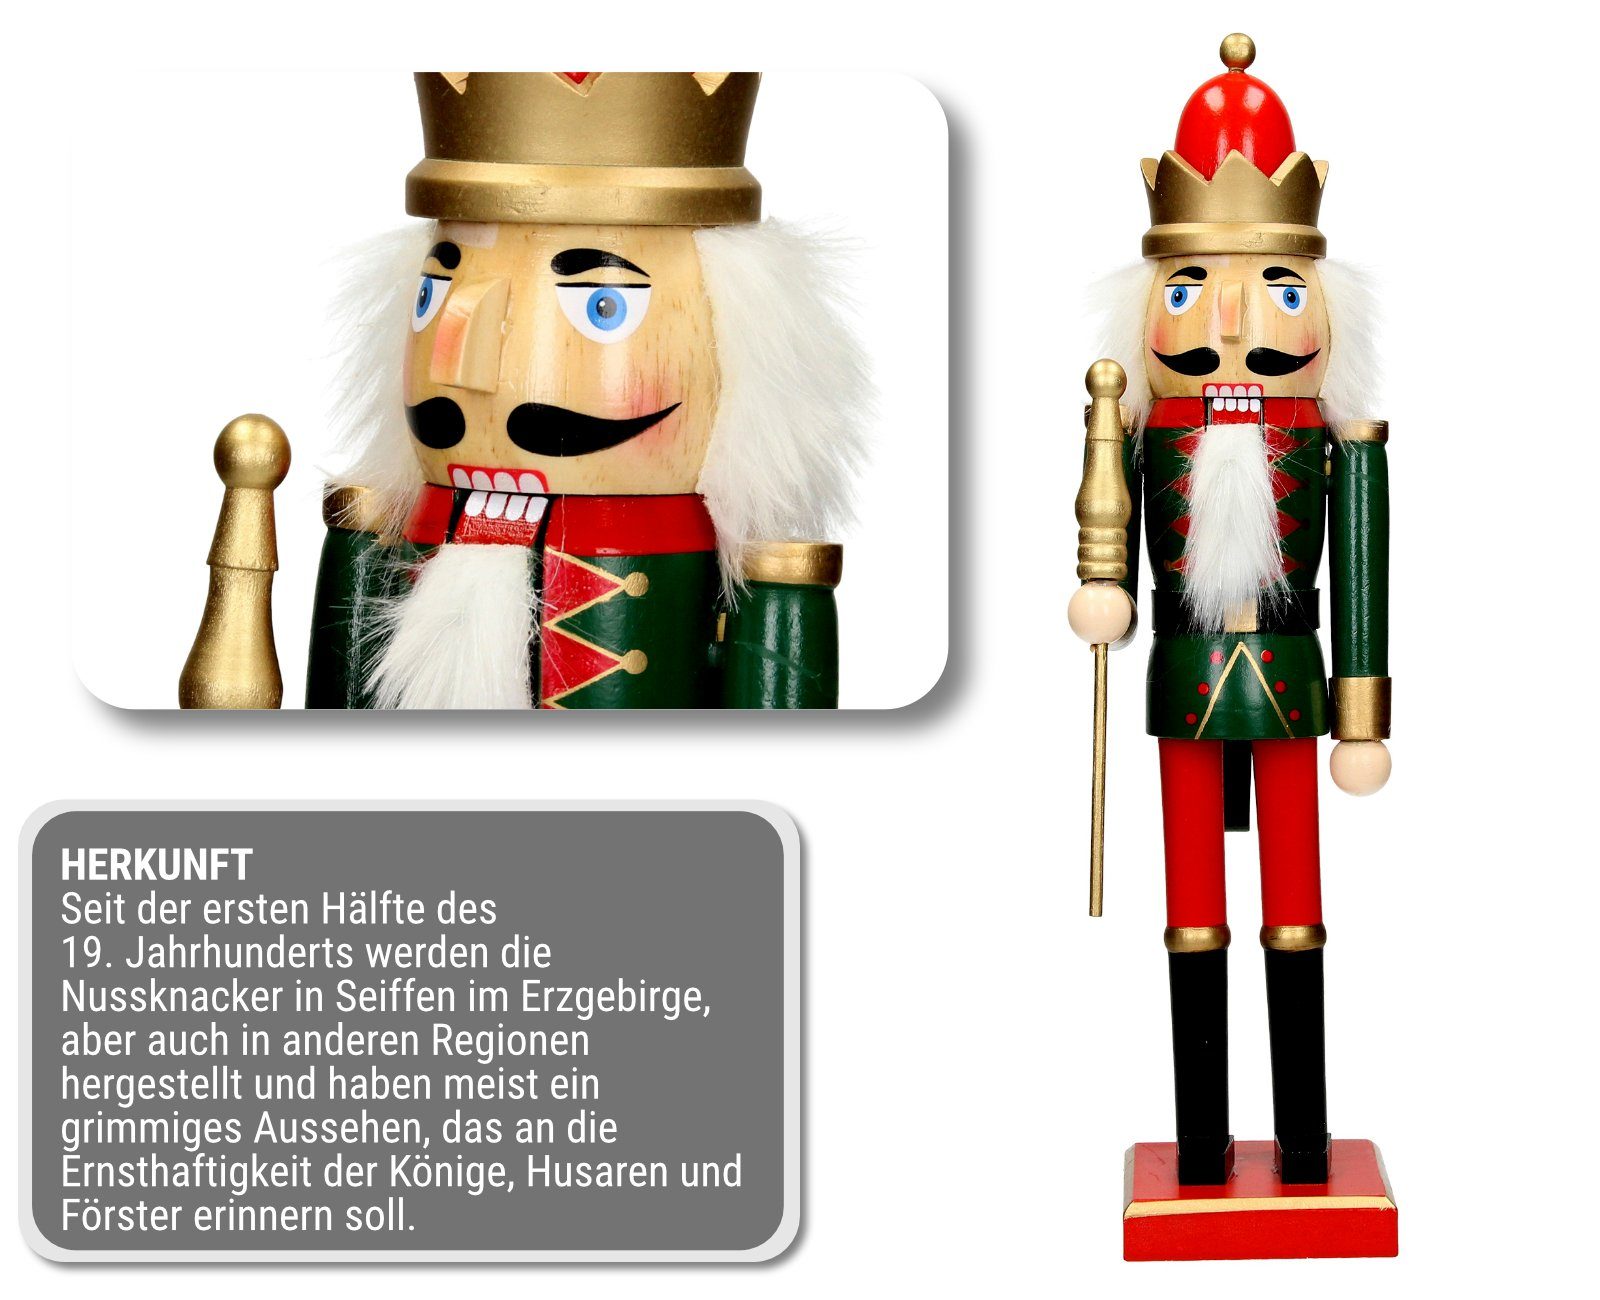 HAGO Holz Nussknacker Nussbeisser rot Erzgebirge Unikat Weihnachtsfigur Volkskunst Figur Deko